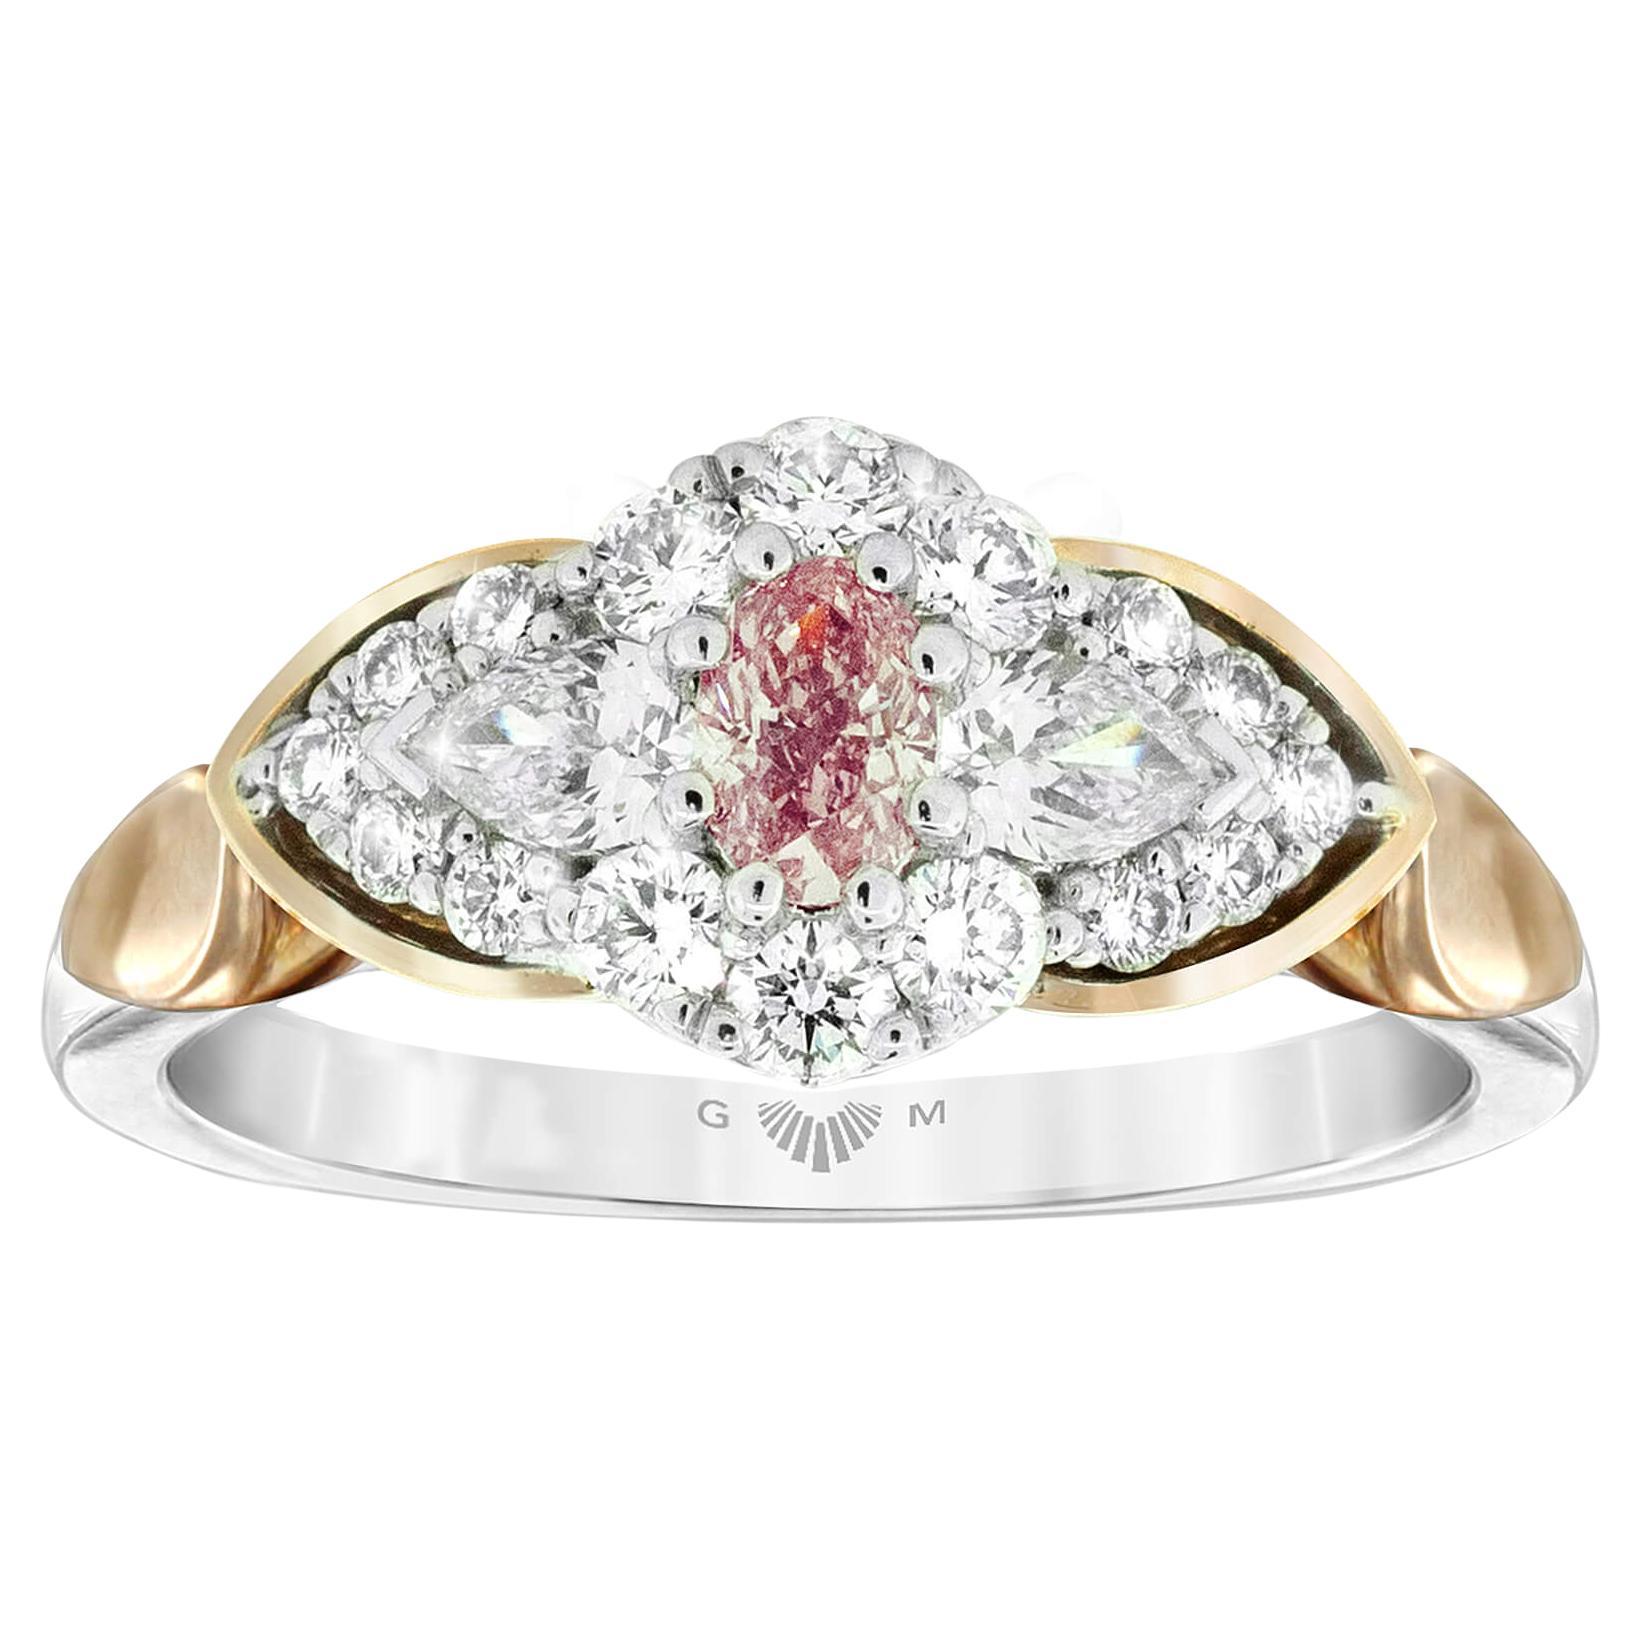 Pink & White Diamond Ring - Gerard McCabe's Eagle Design For Sale